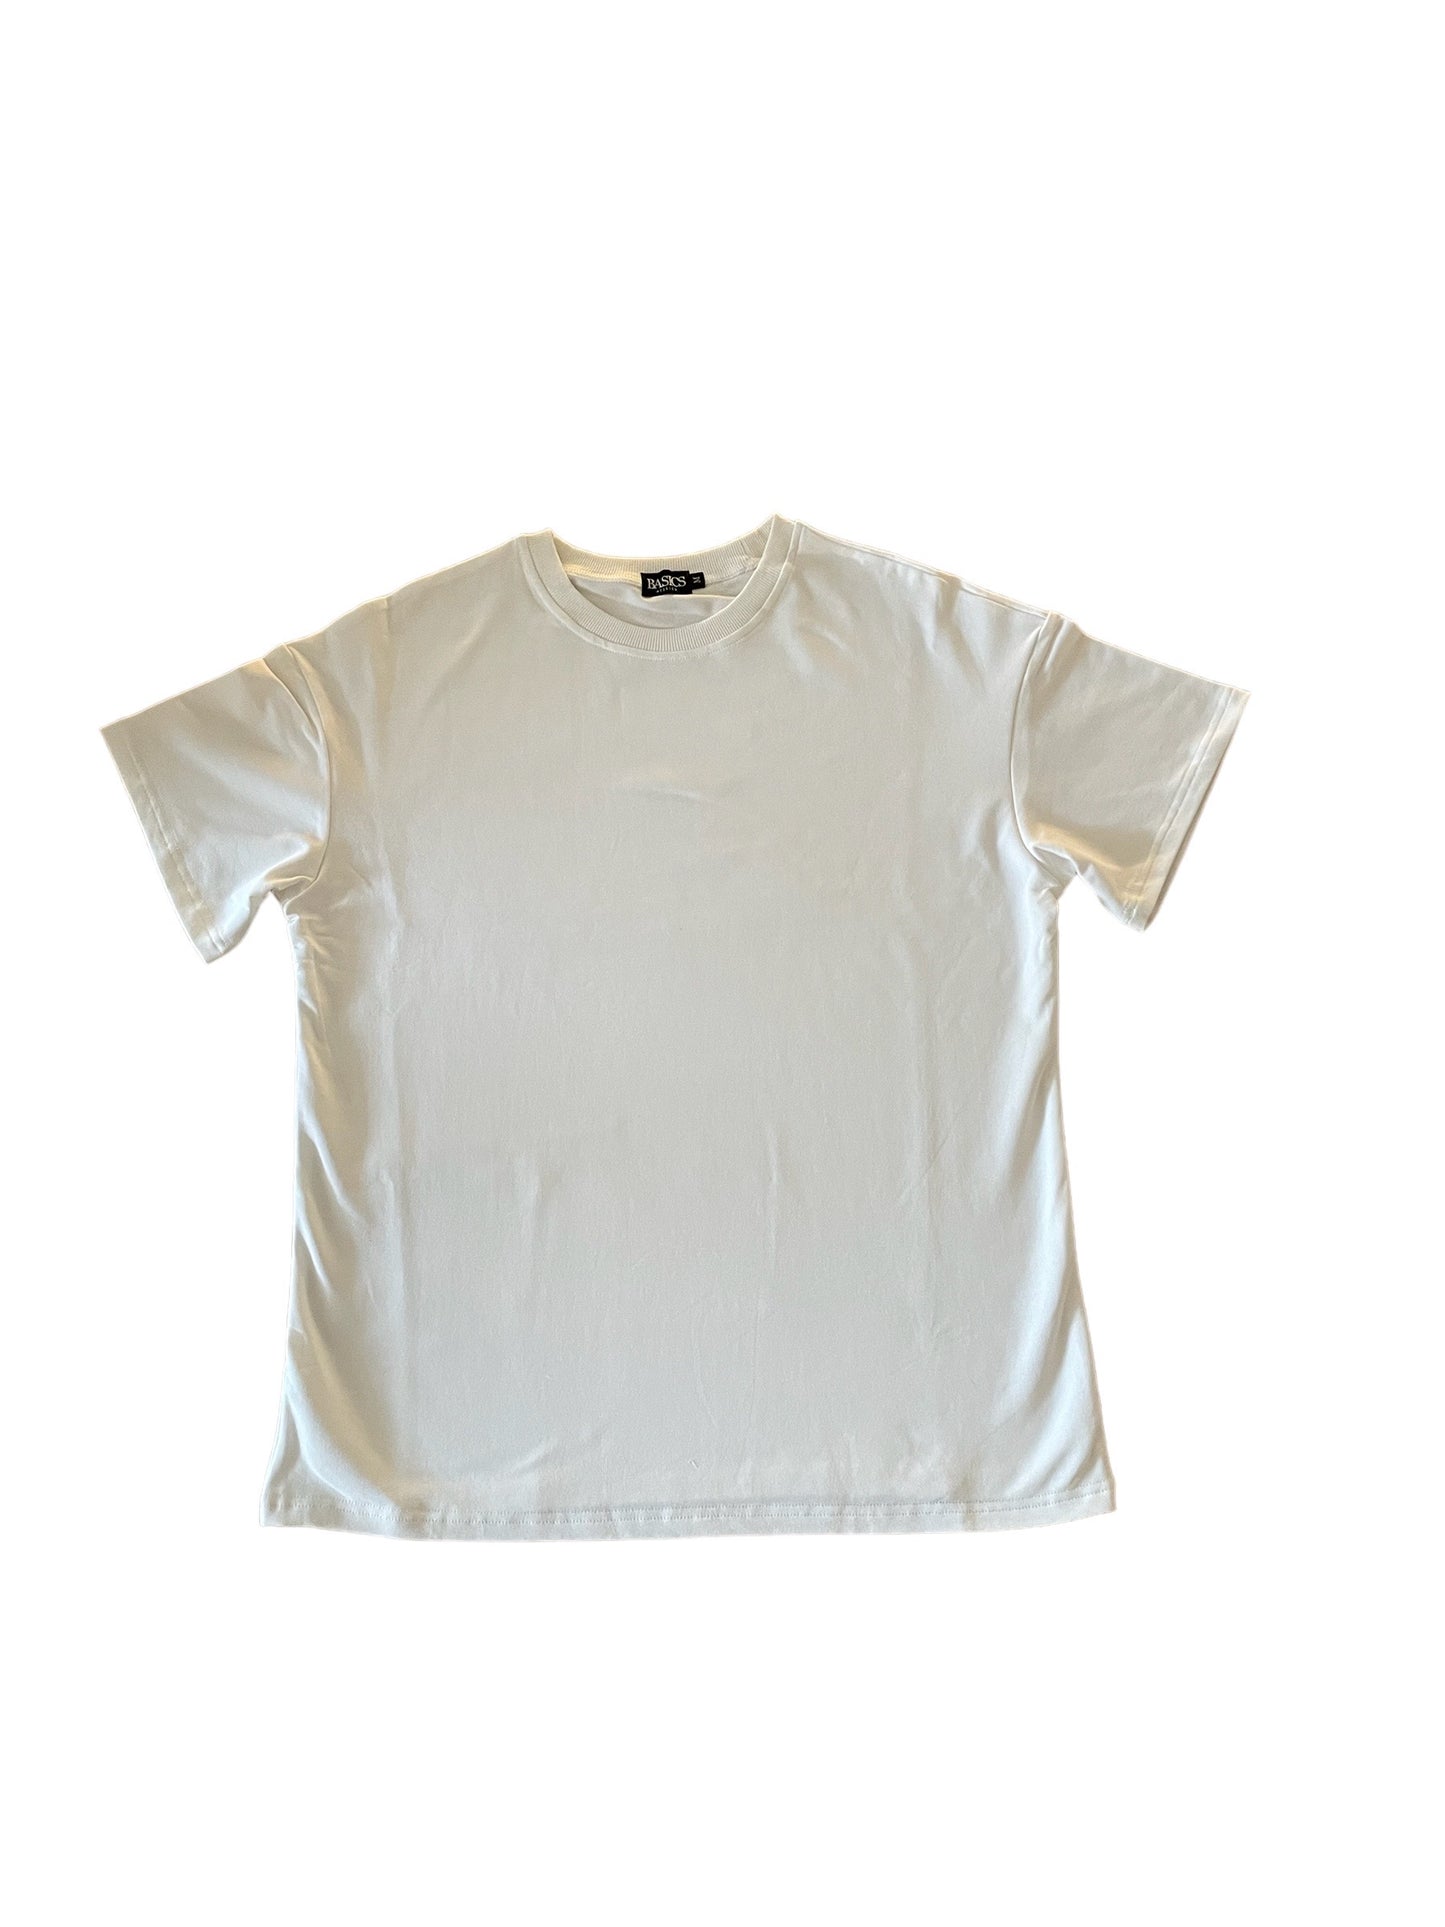 Oversize White T-Shirt